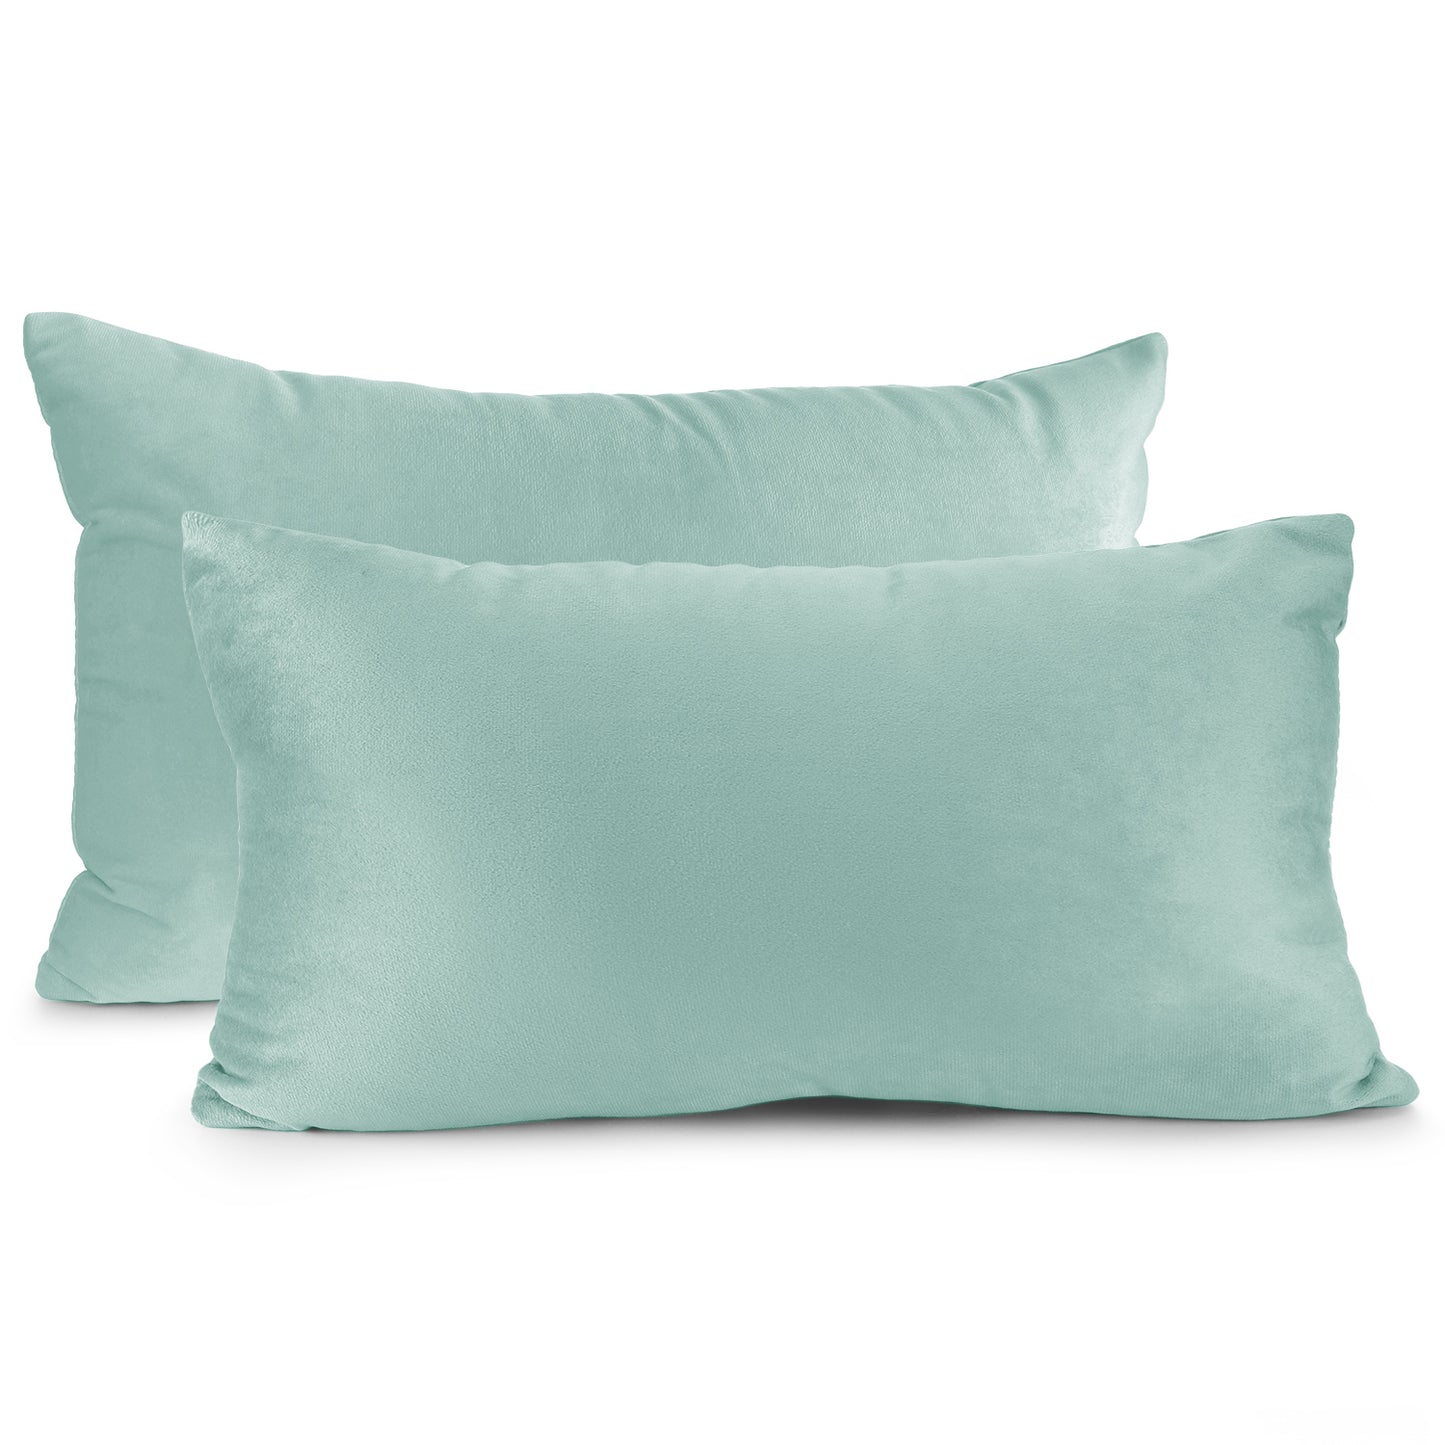 2 Pack 12 x 20 Nestl Bedding Throw Pillow Covers, Cozy Velvet Decorative Outdoor Pillow